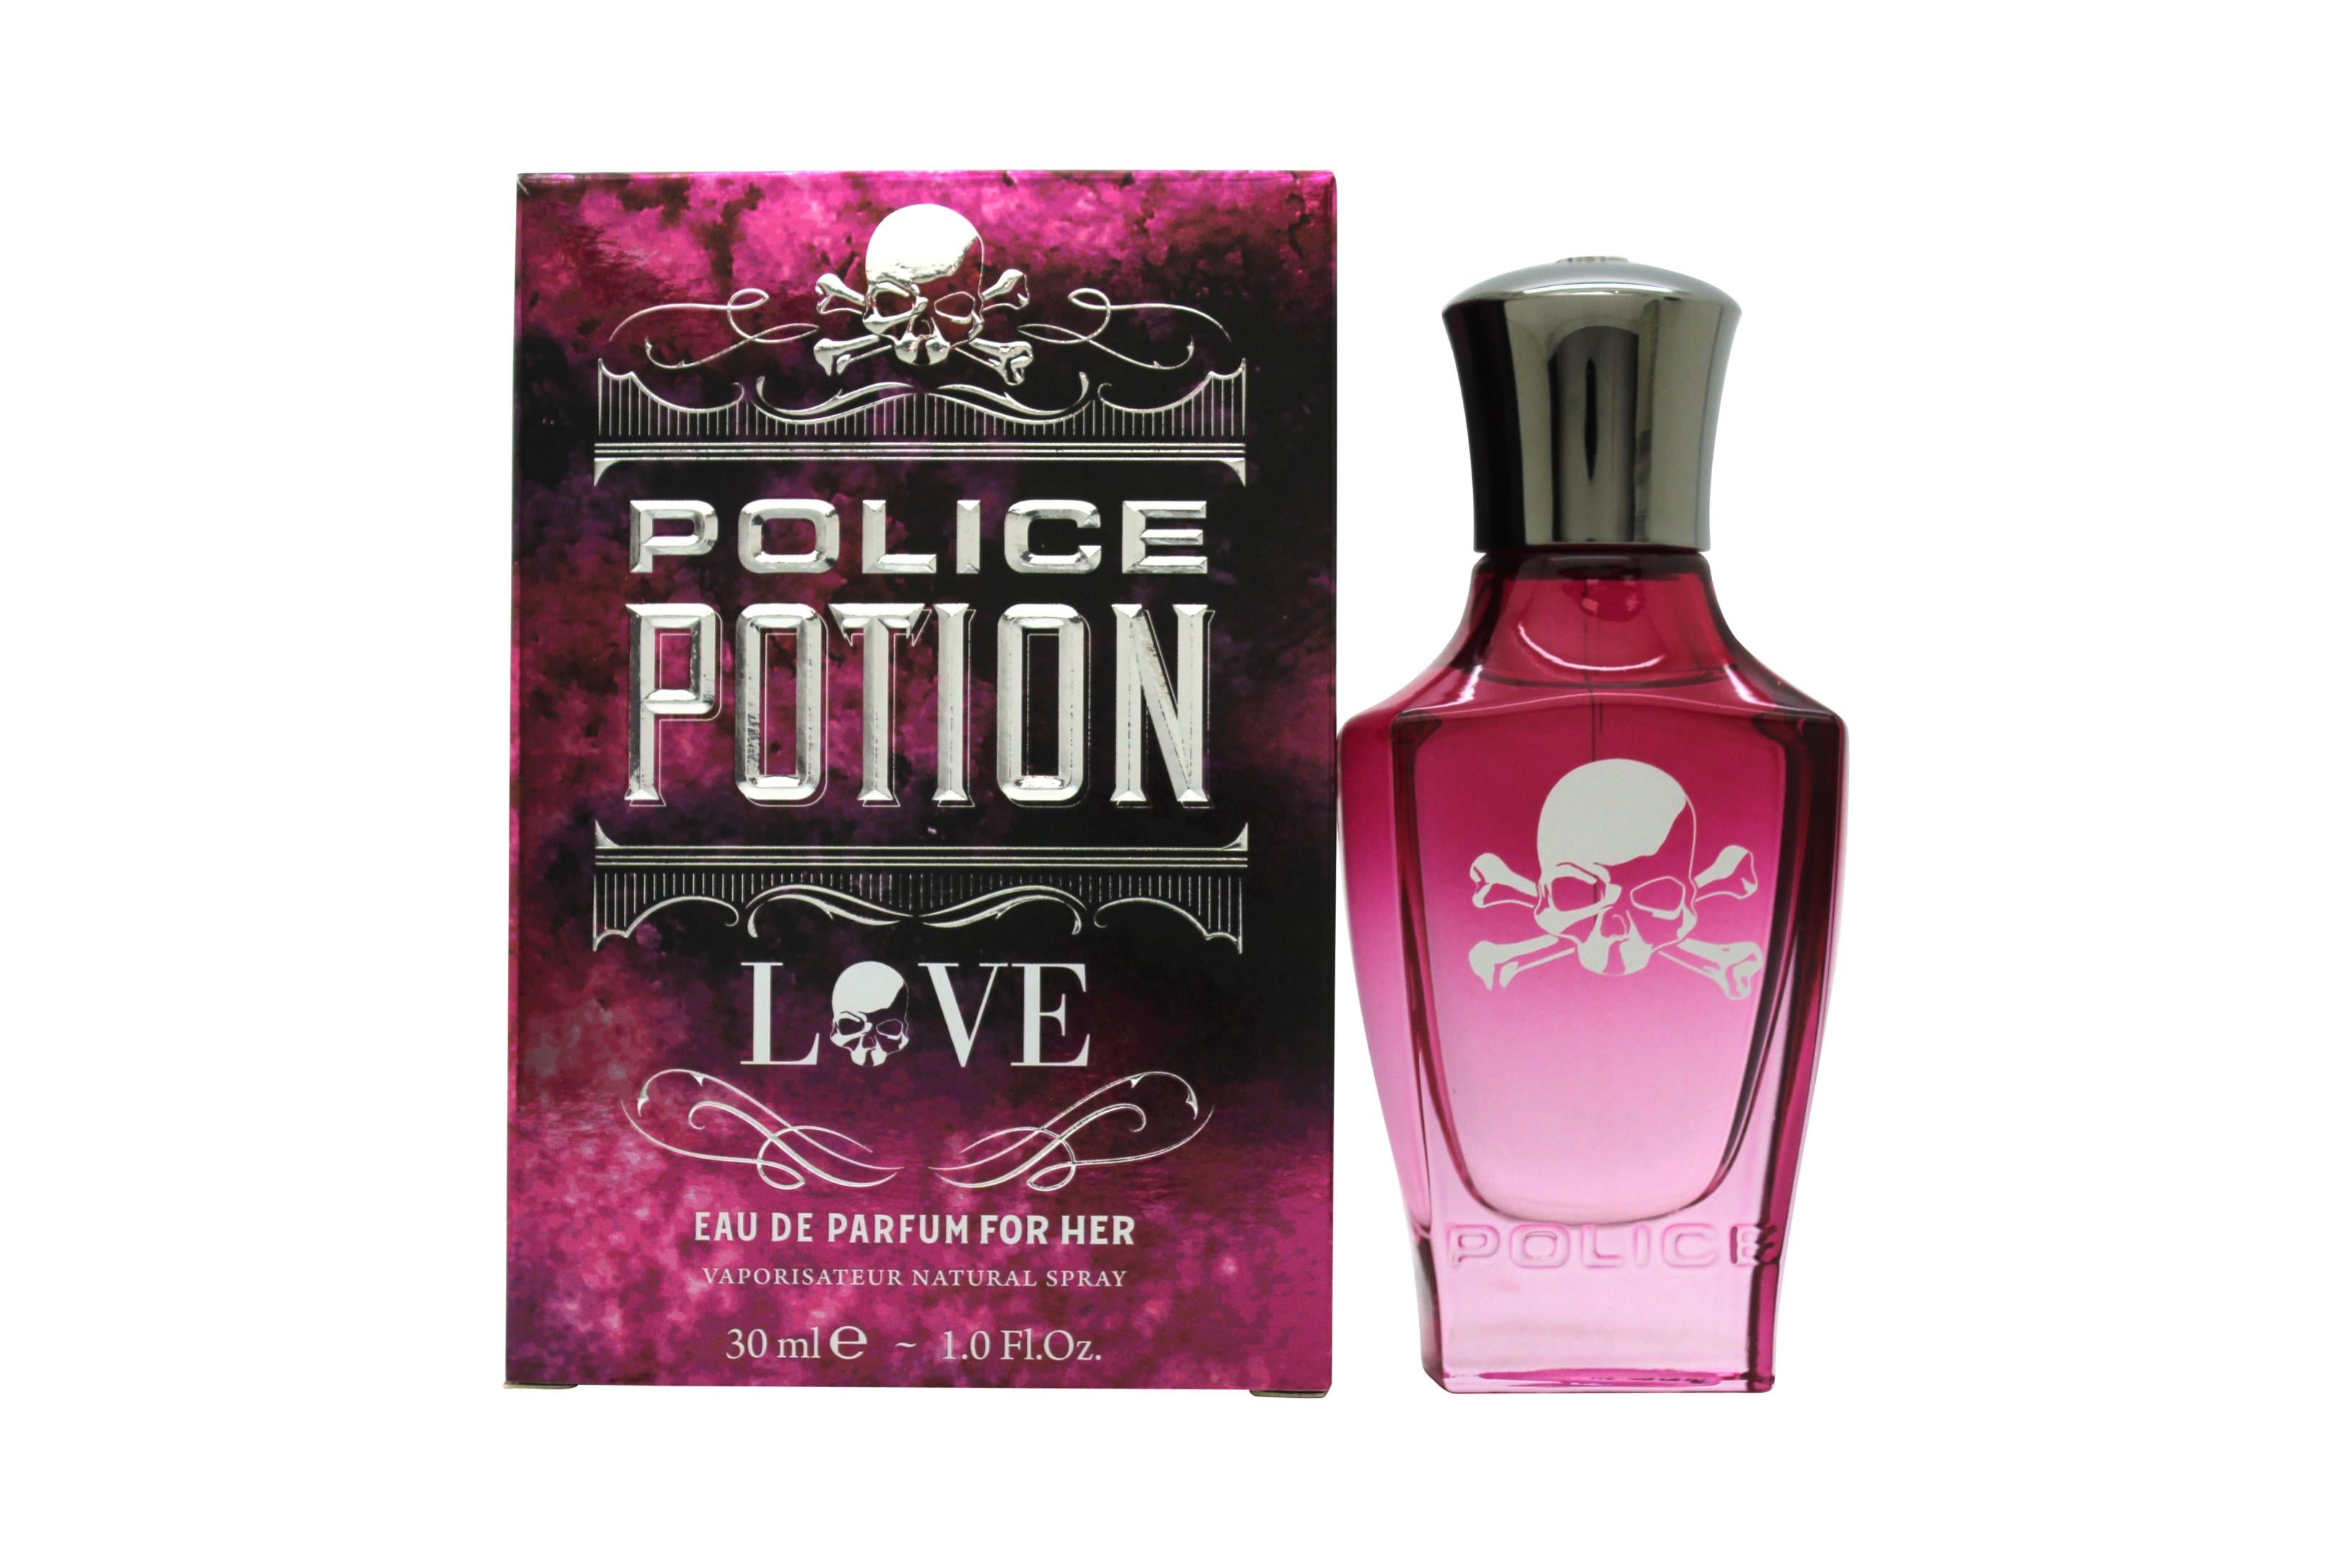 View Police Potion Love Eau de Parfum 30ml Spray information